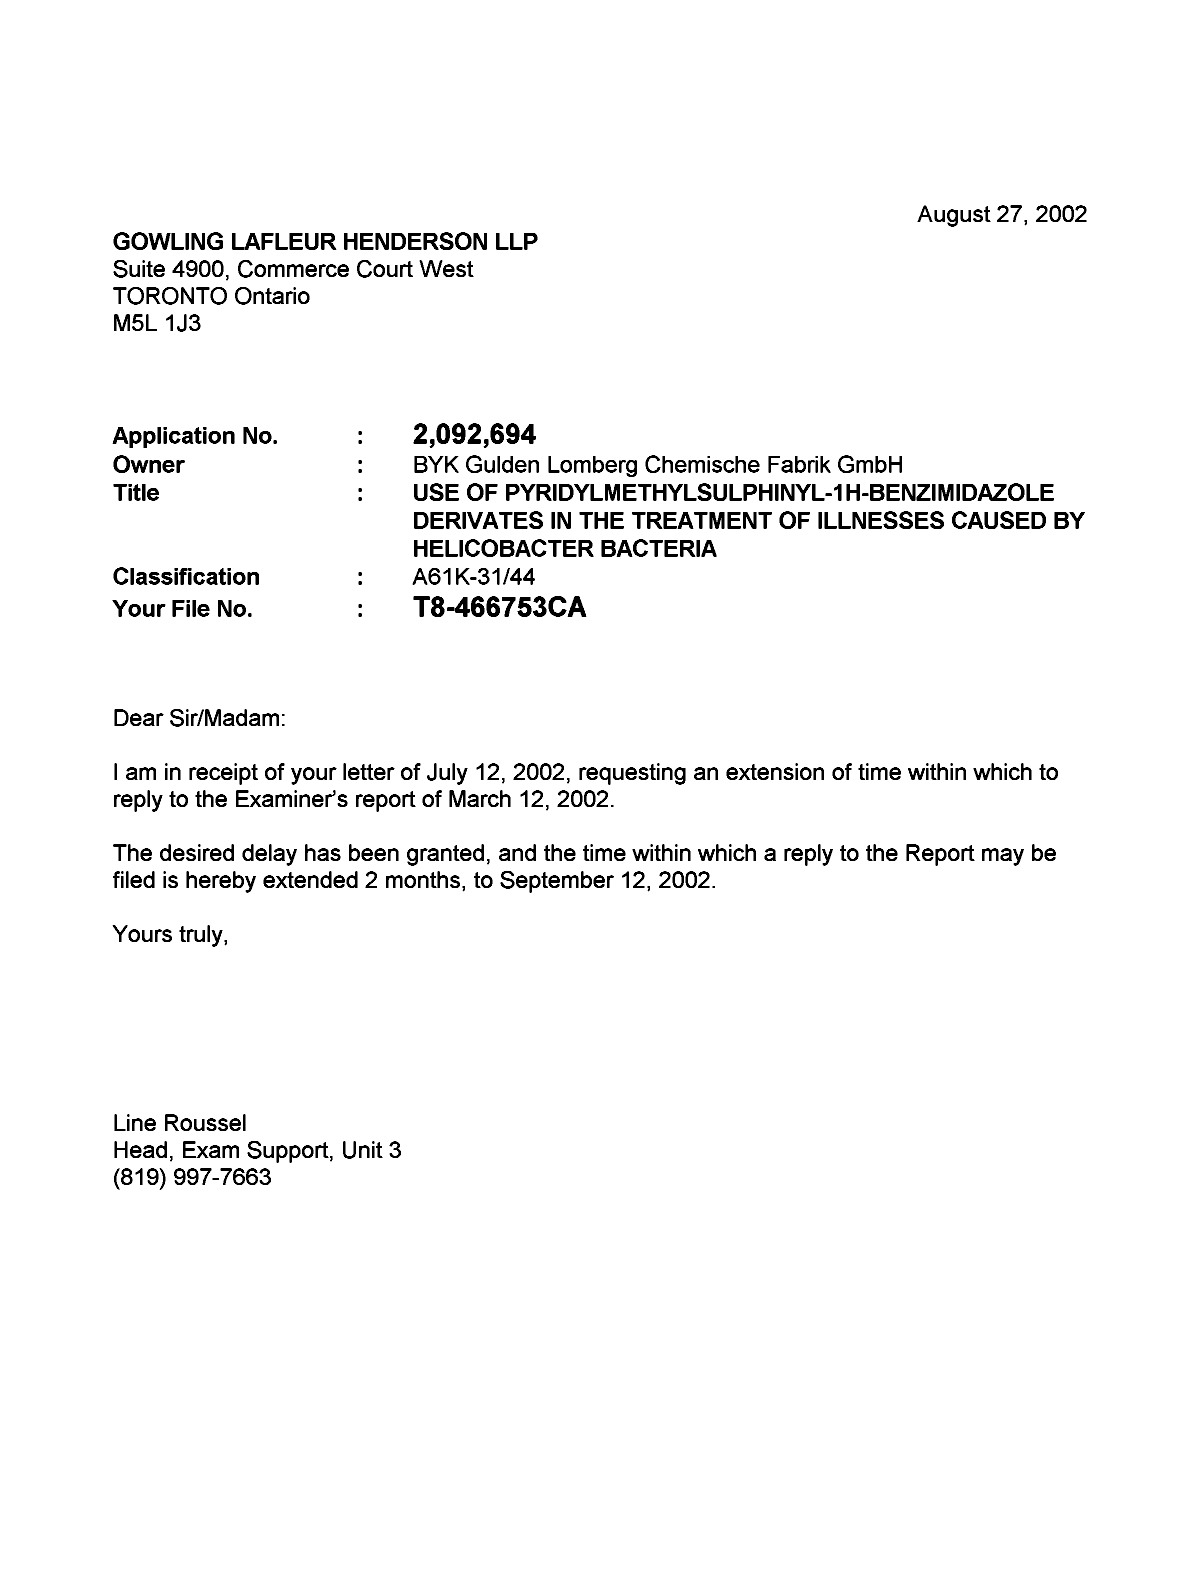 Canadian Patent Document 2092694. Correspondence 20011227. Image 1 of 1